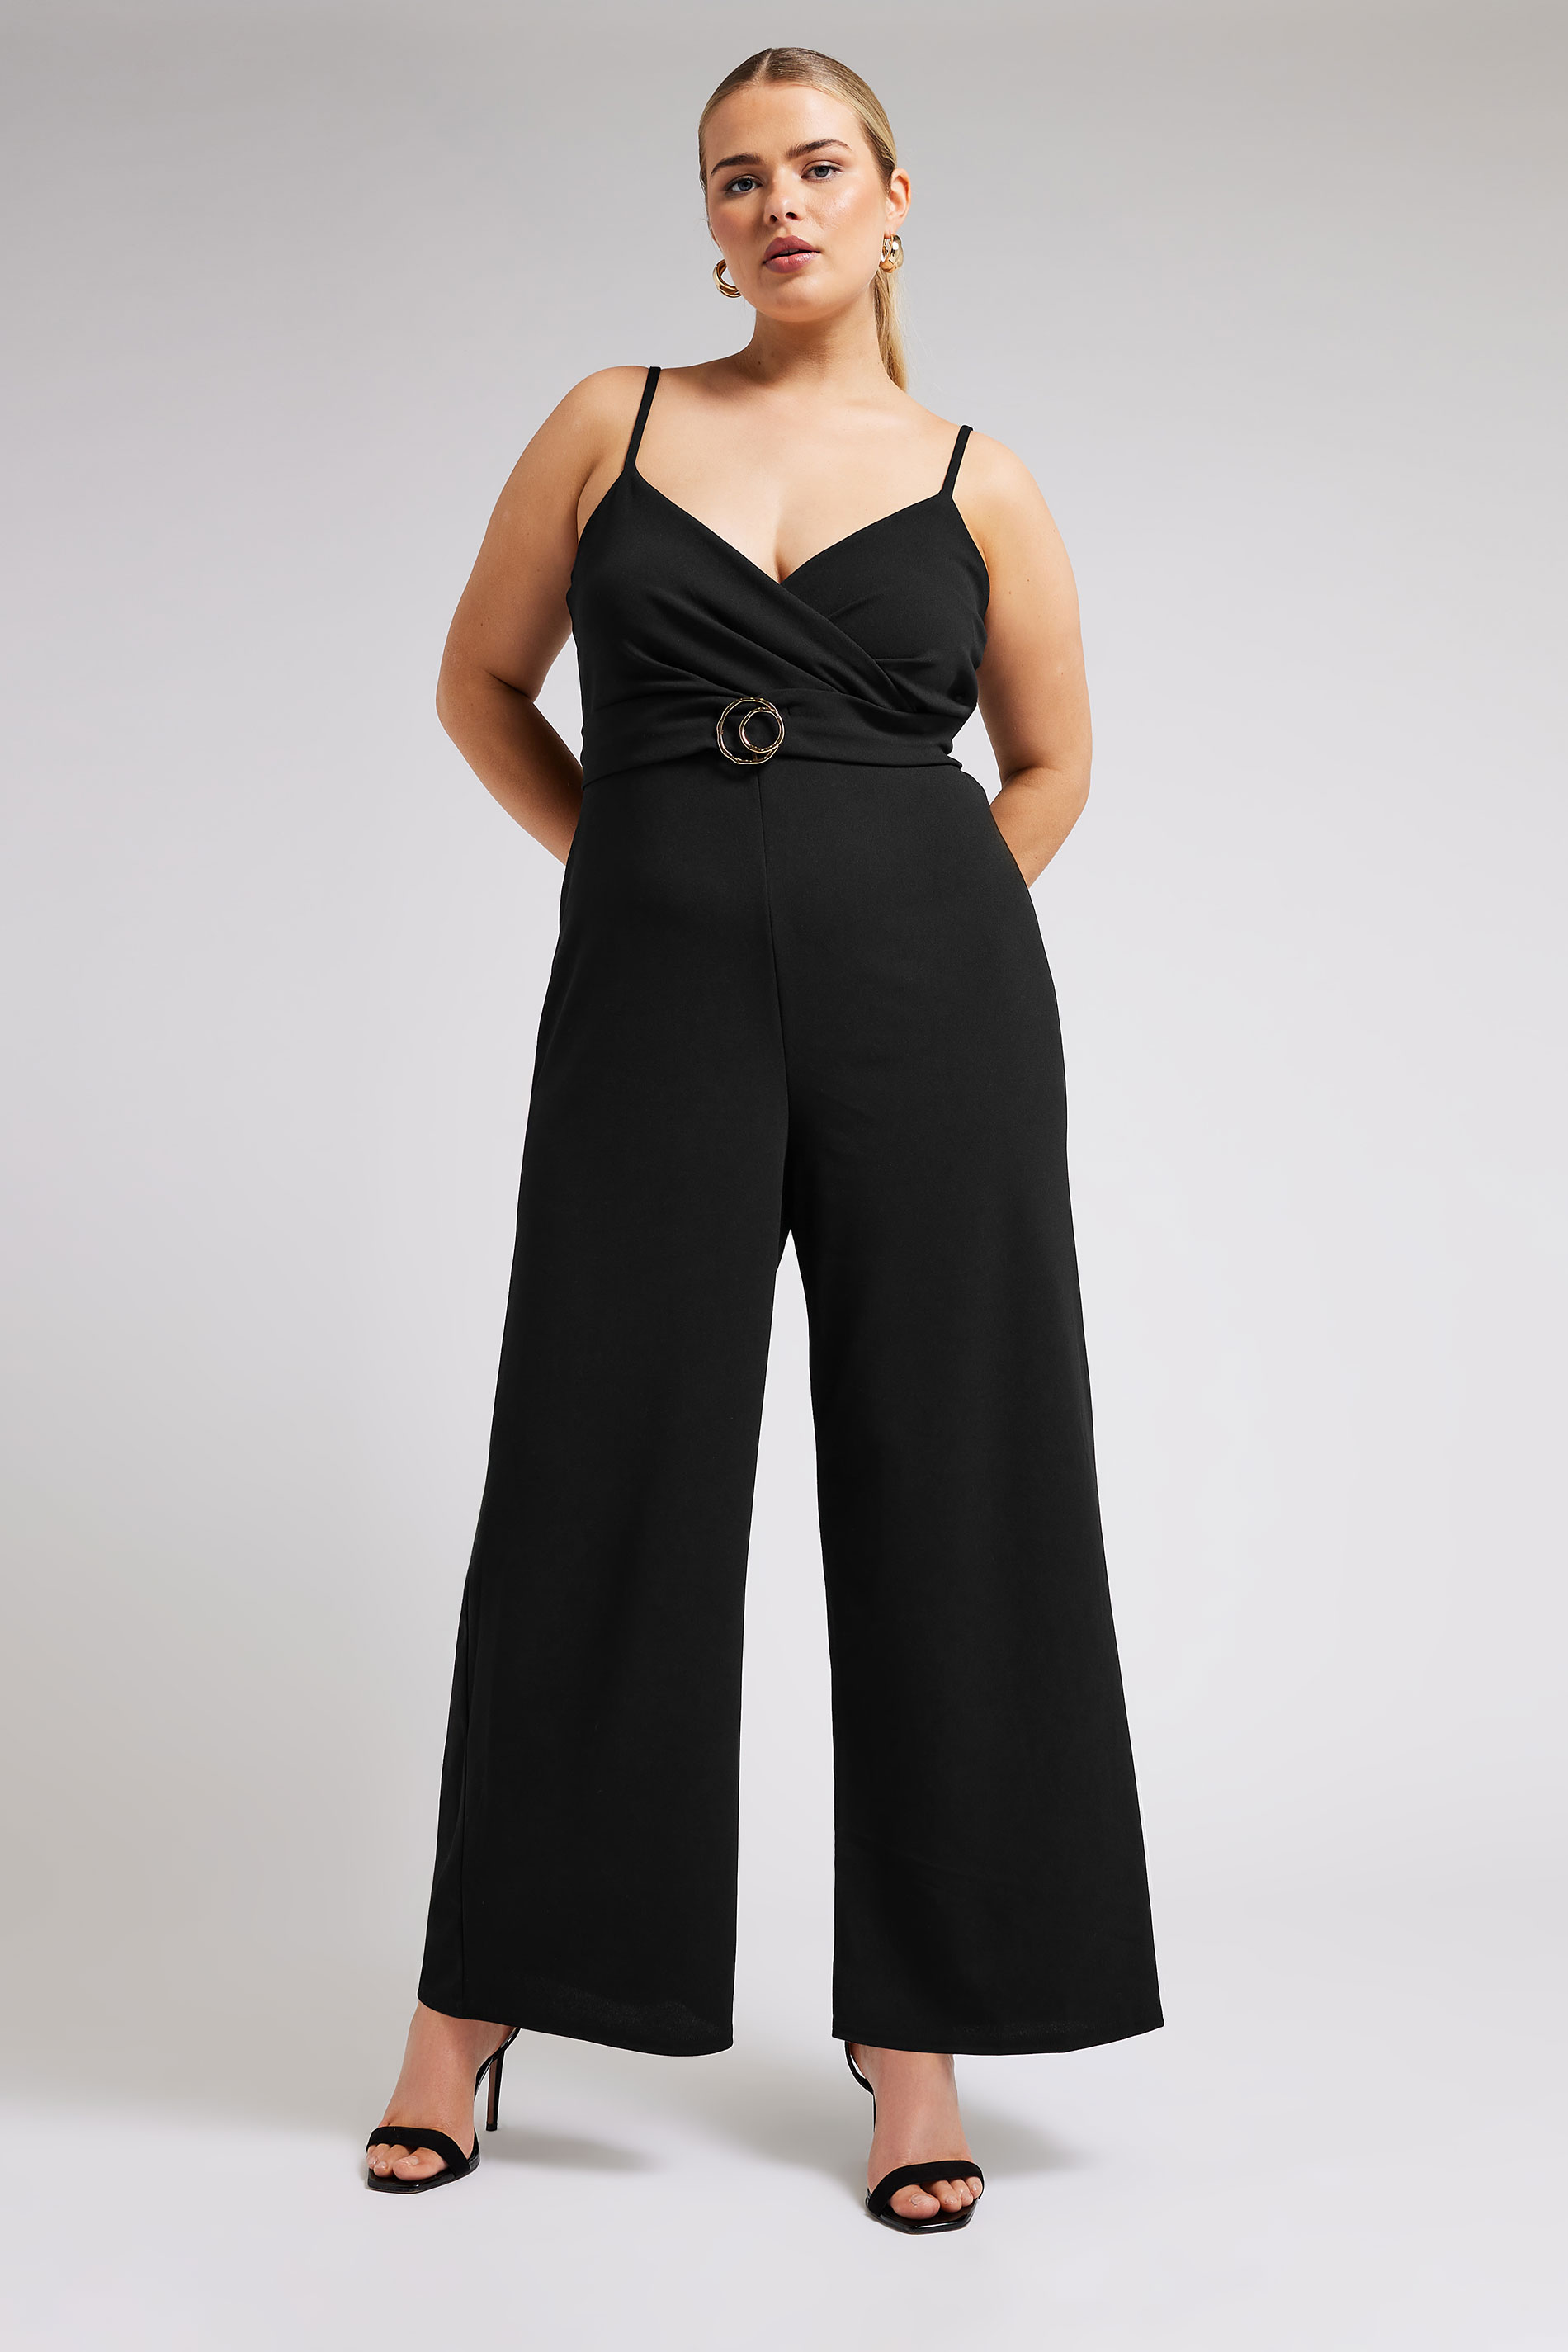 YOURS LONDON Plus Size Black Wrap Front Jumpsuit | Yours Clothing 1